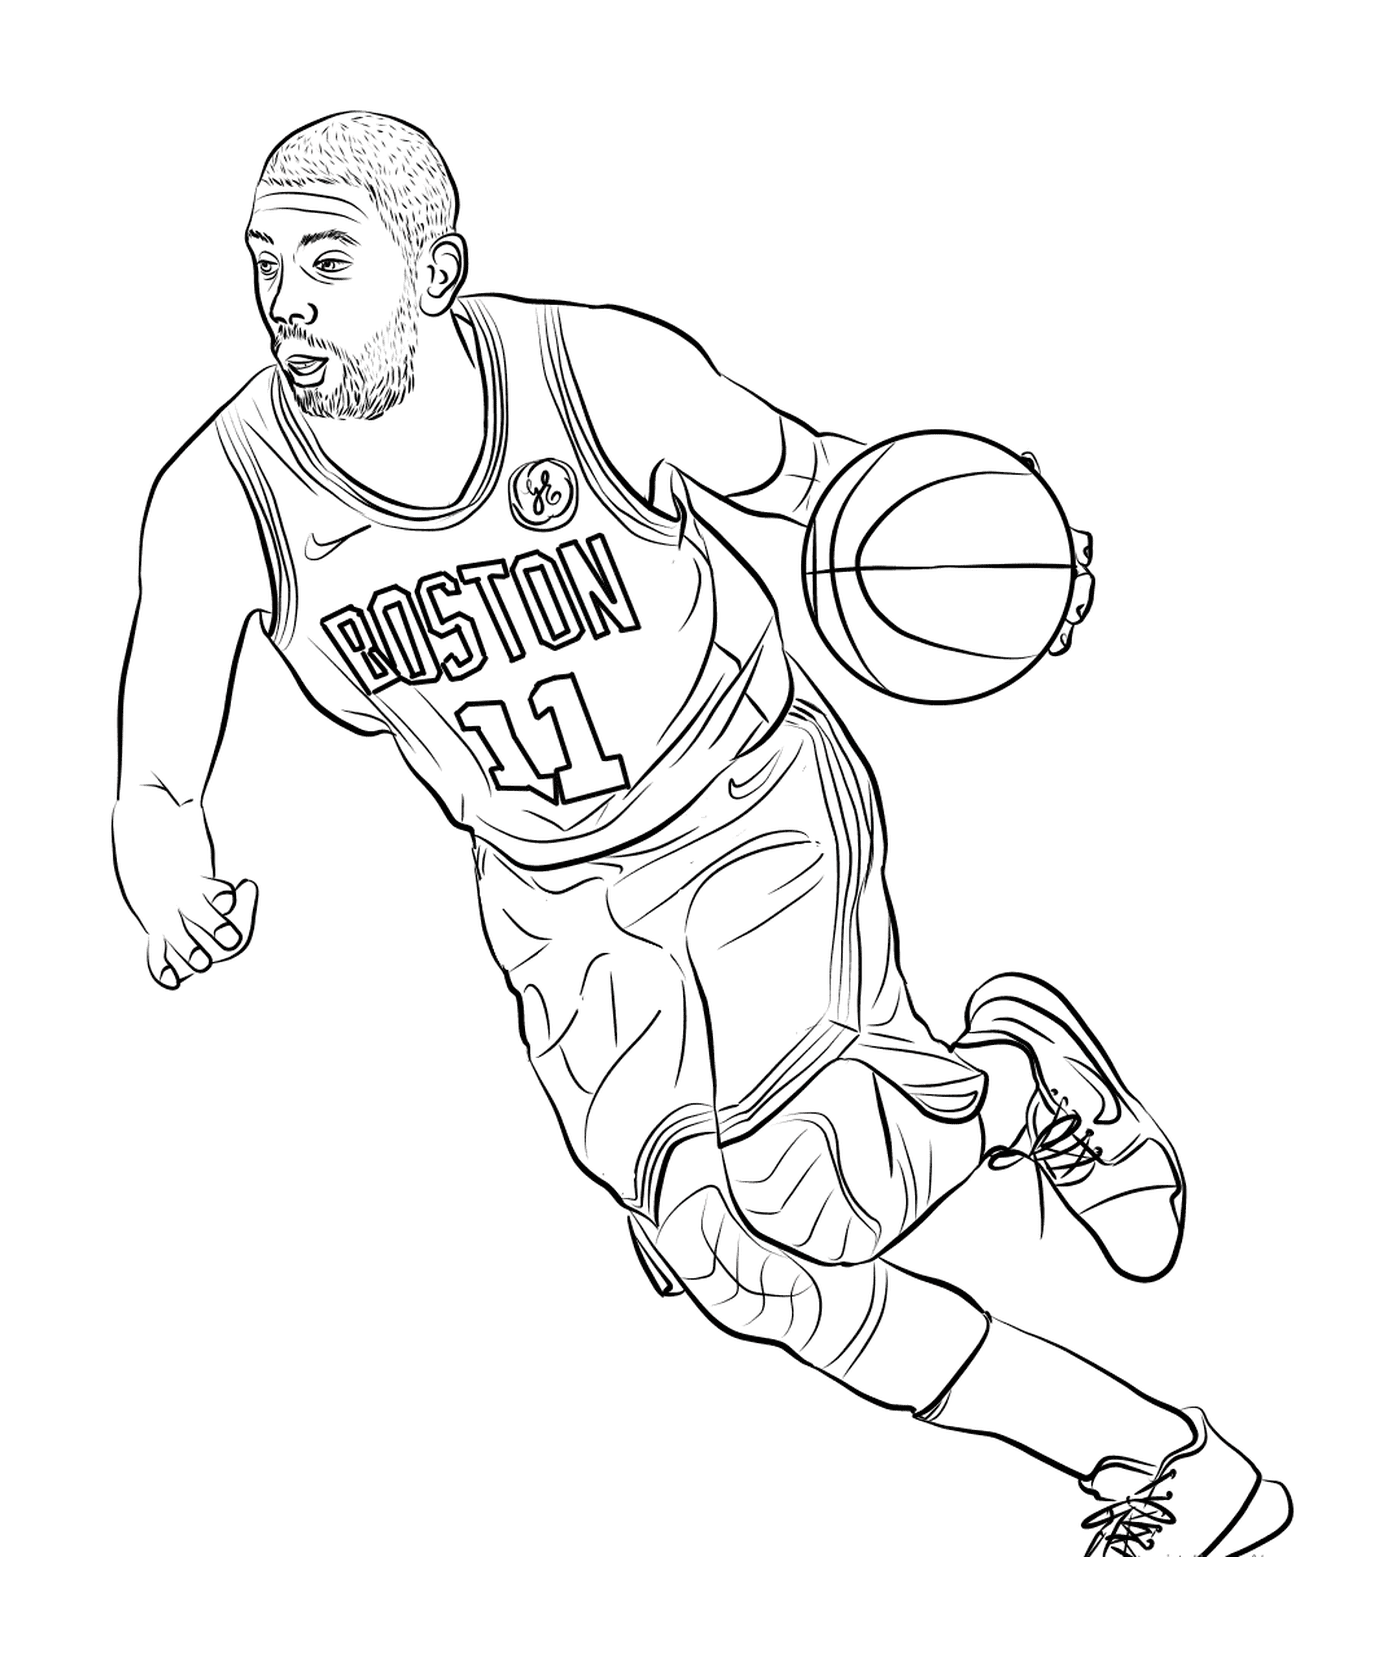  Kyrie Irving juega al baloncesto 